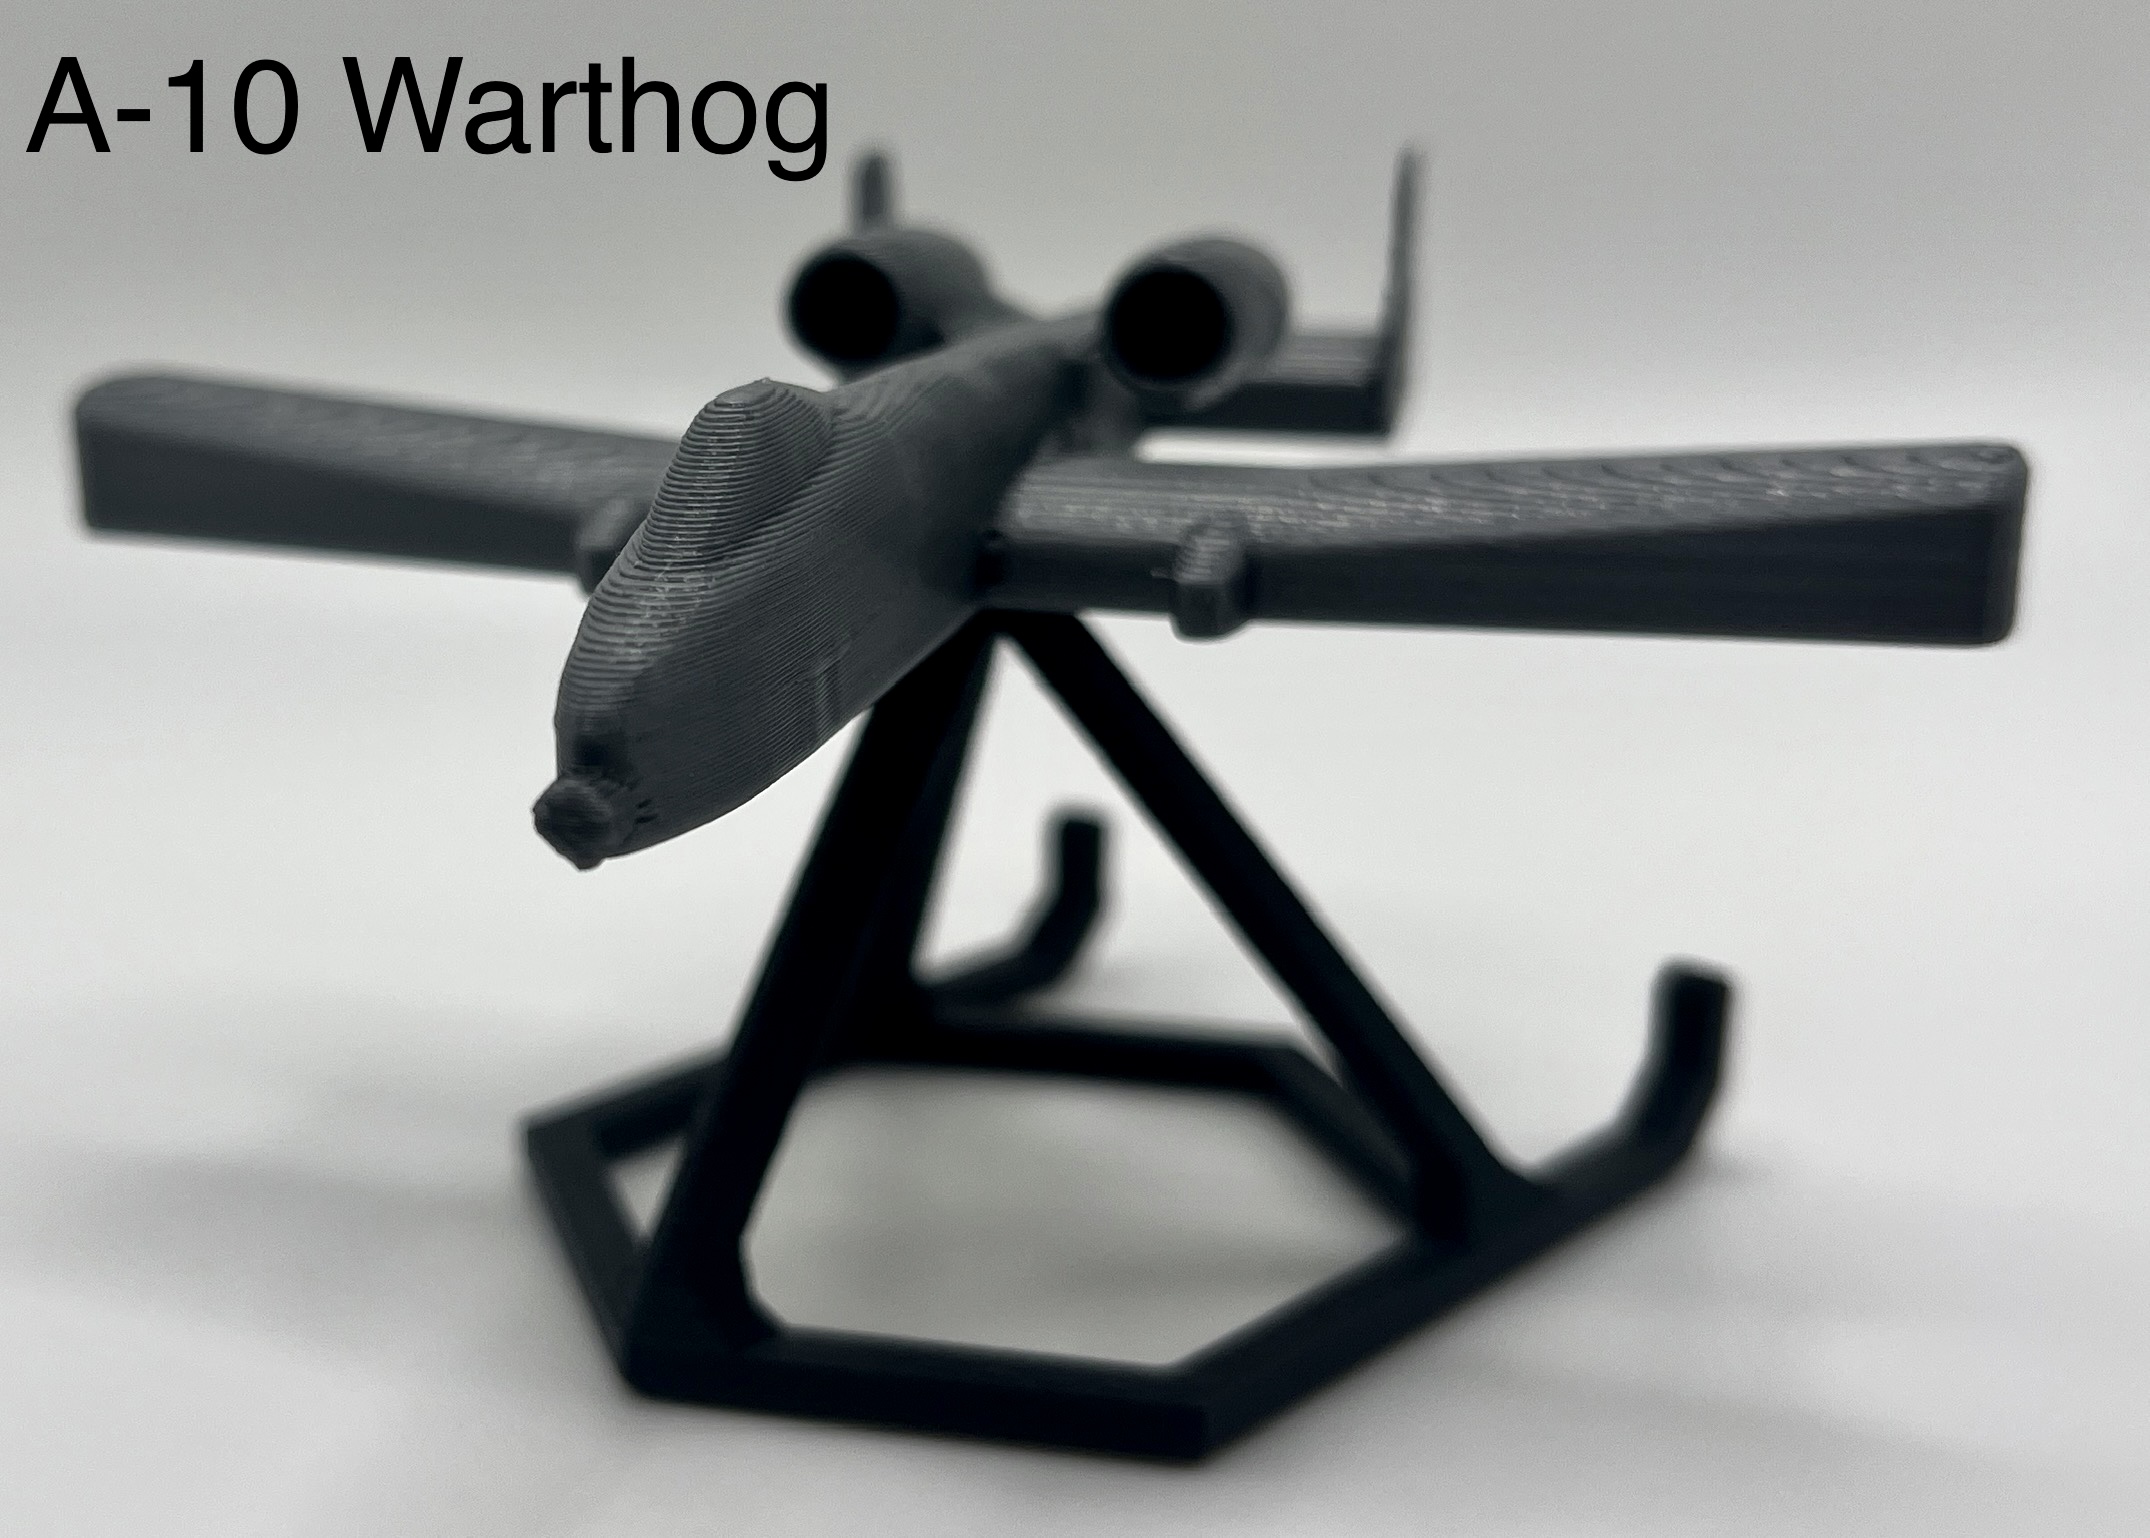 Detailed A-10 Warthog Magnet